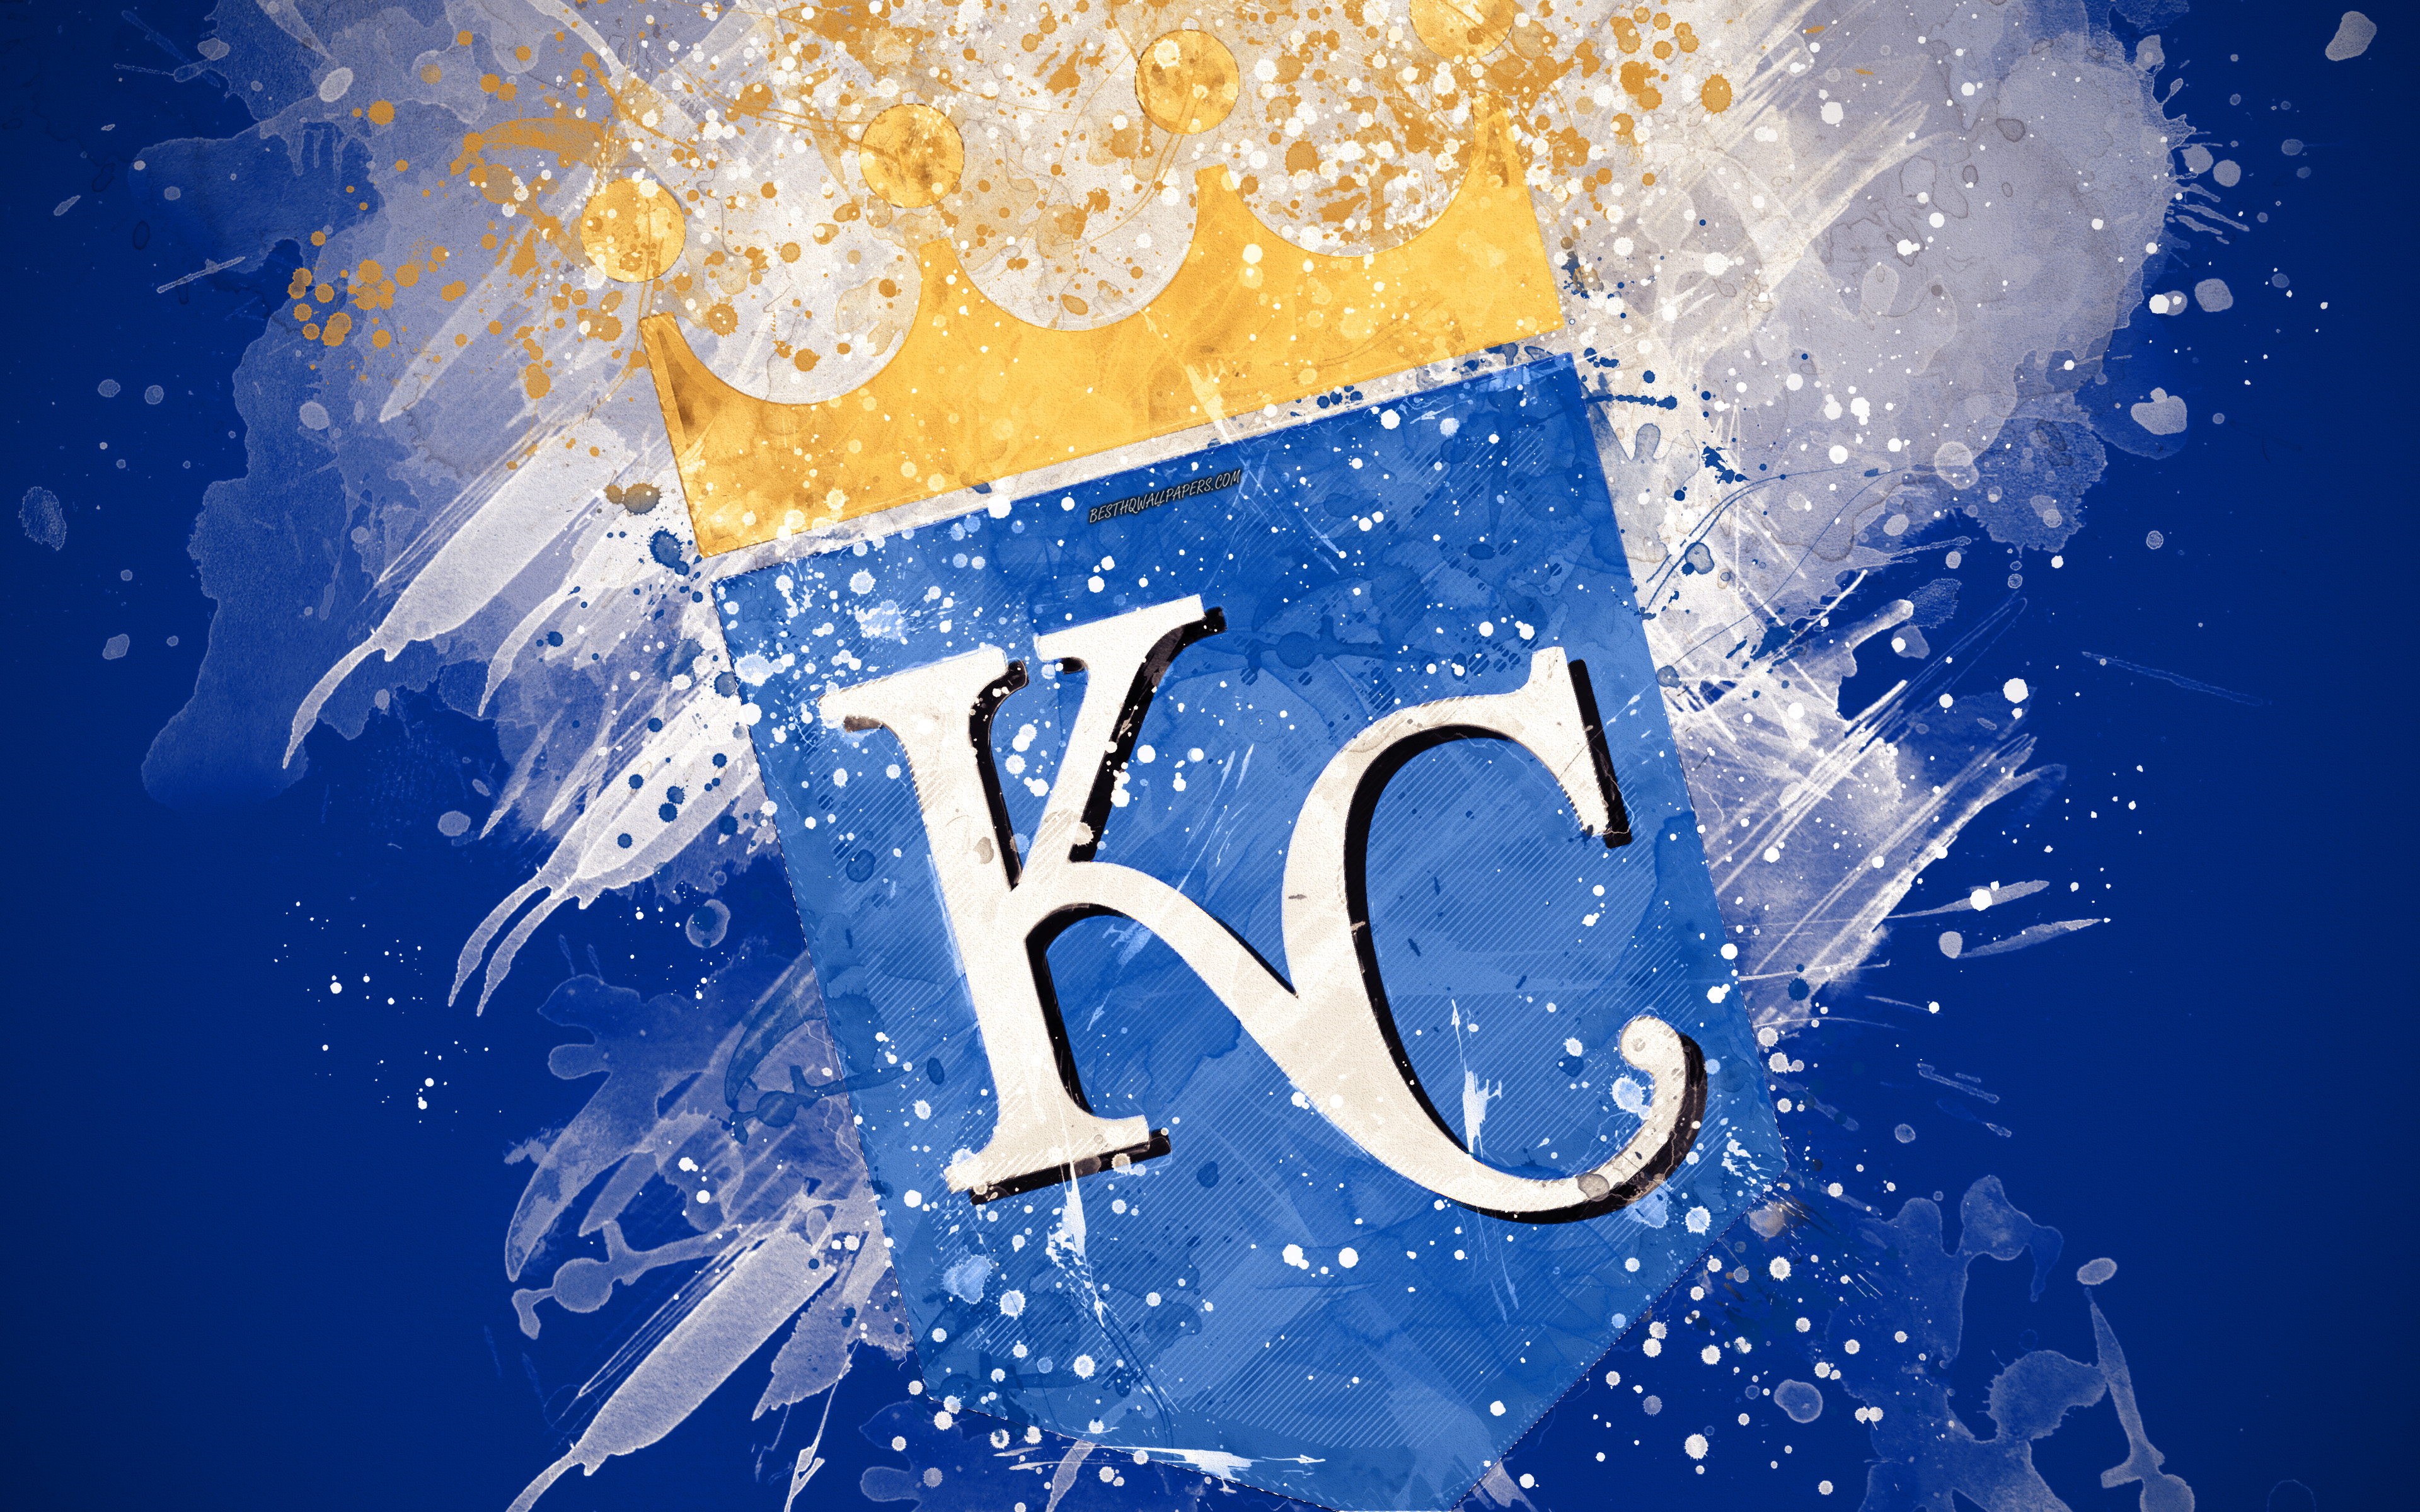 Download wallpaper Kansas City Royals, 4k, grunge art, logo, american baseball club, MLB, blue background, emblem, Kansas City, Missouri, USA, Major League Baseball, American League, creative art for desktop with resolution 3840x2400